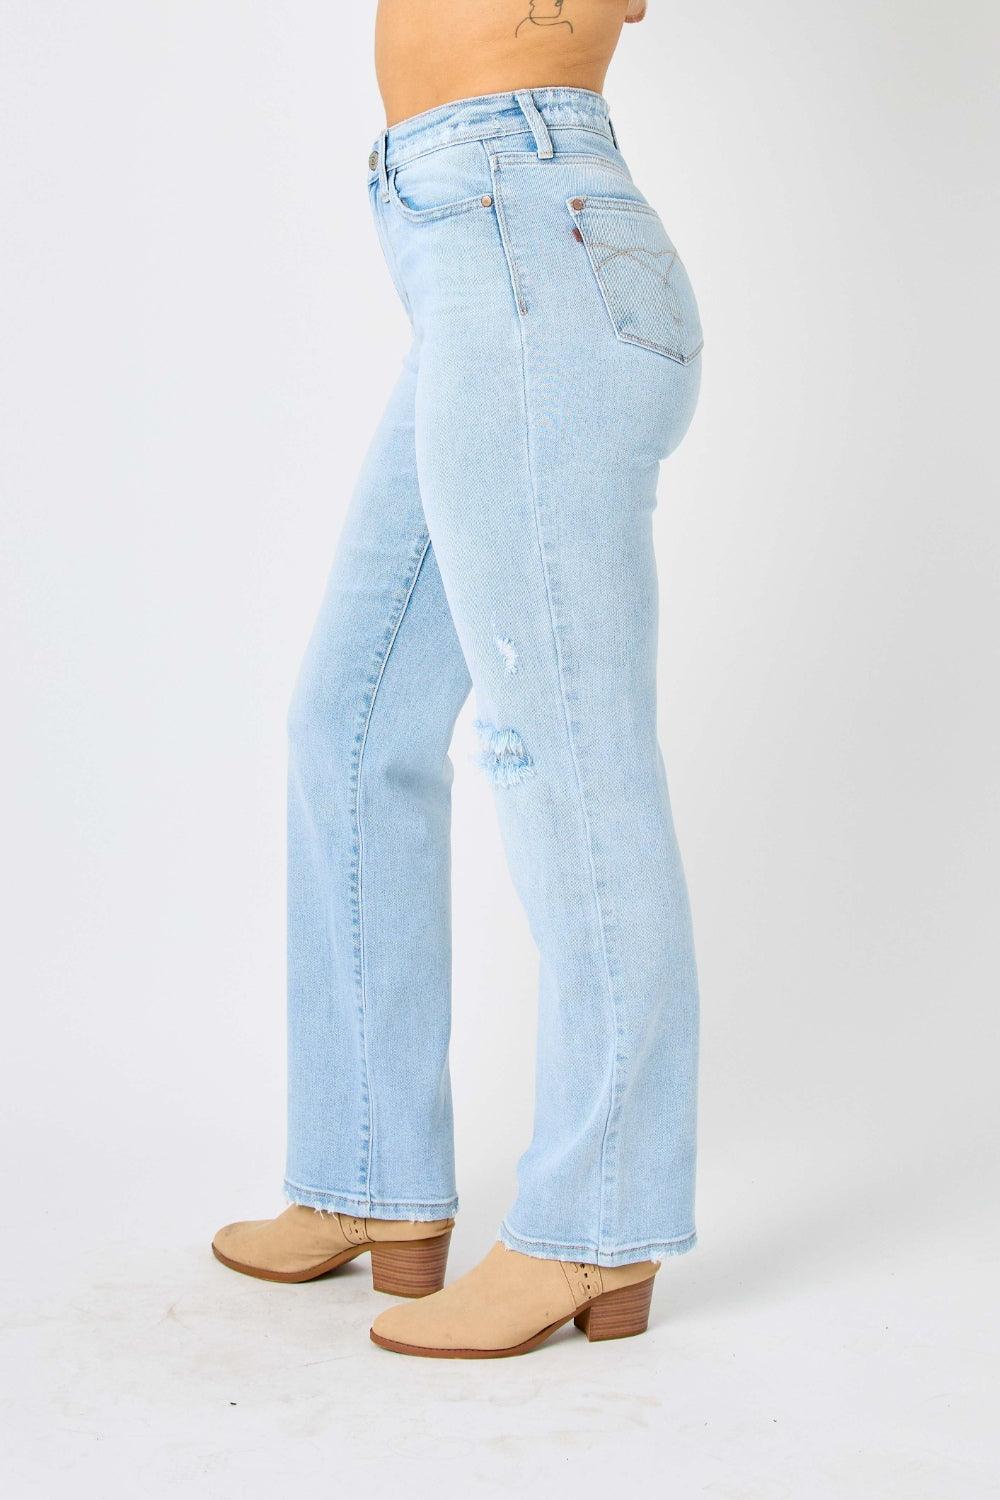 Judy Blue High Waist Distressed Straight Jeans - Jessiz Boutique